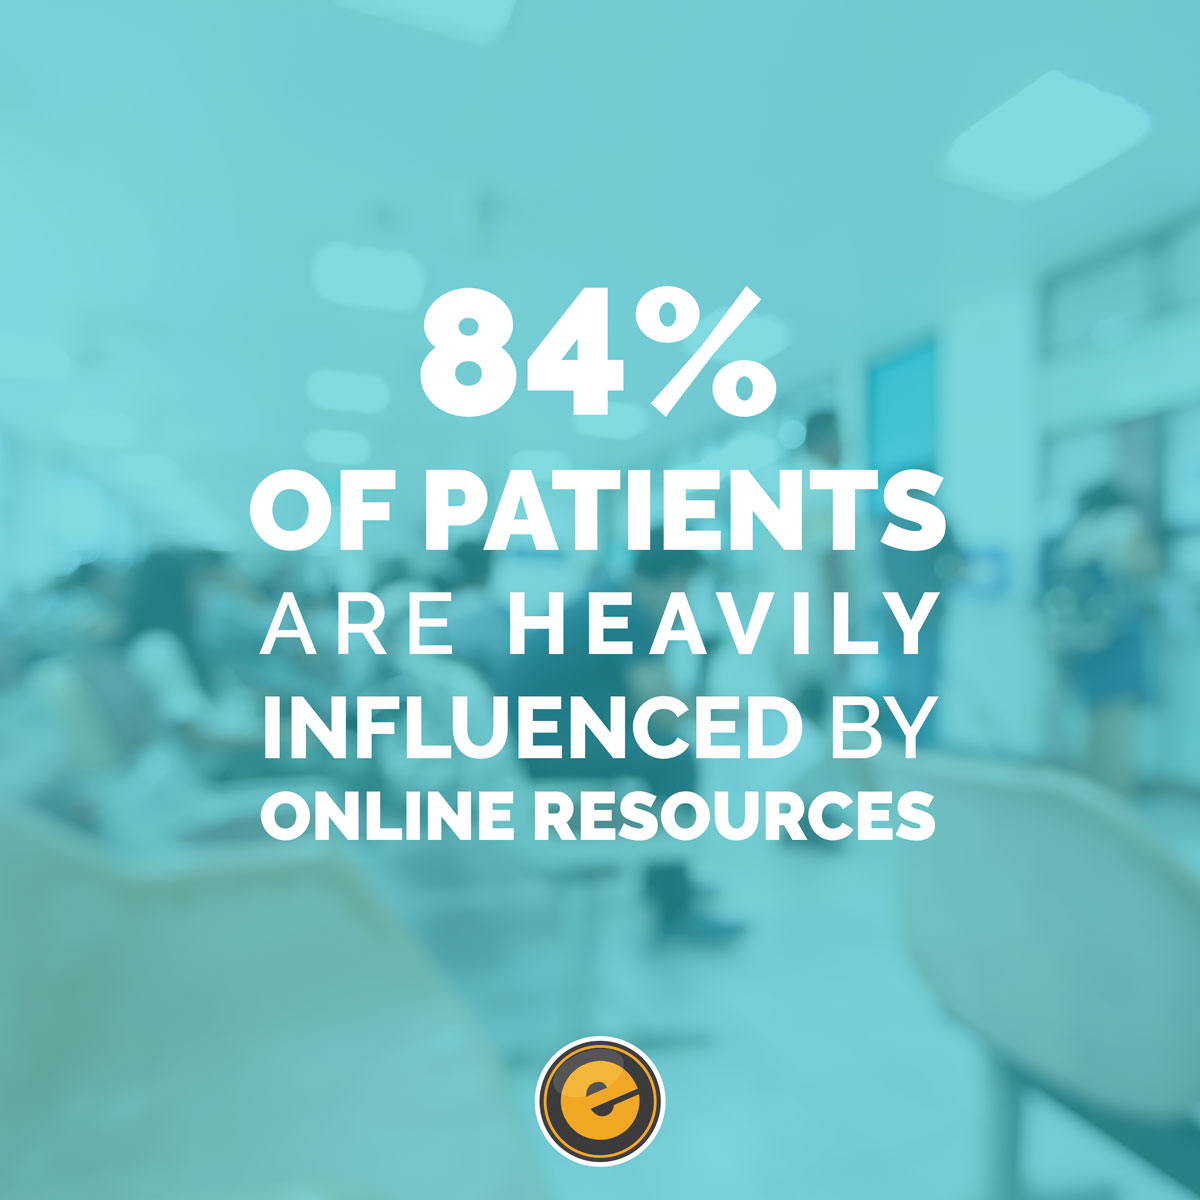 Online Resources Influence Patient Decisions